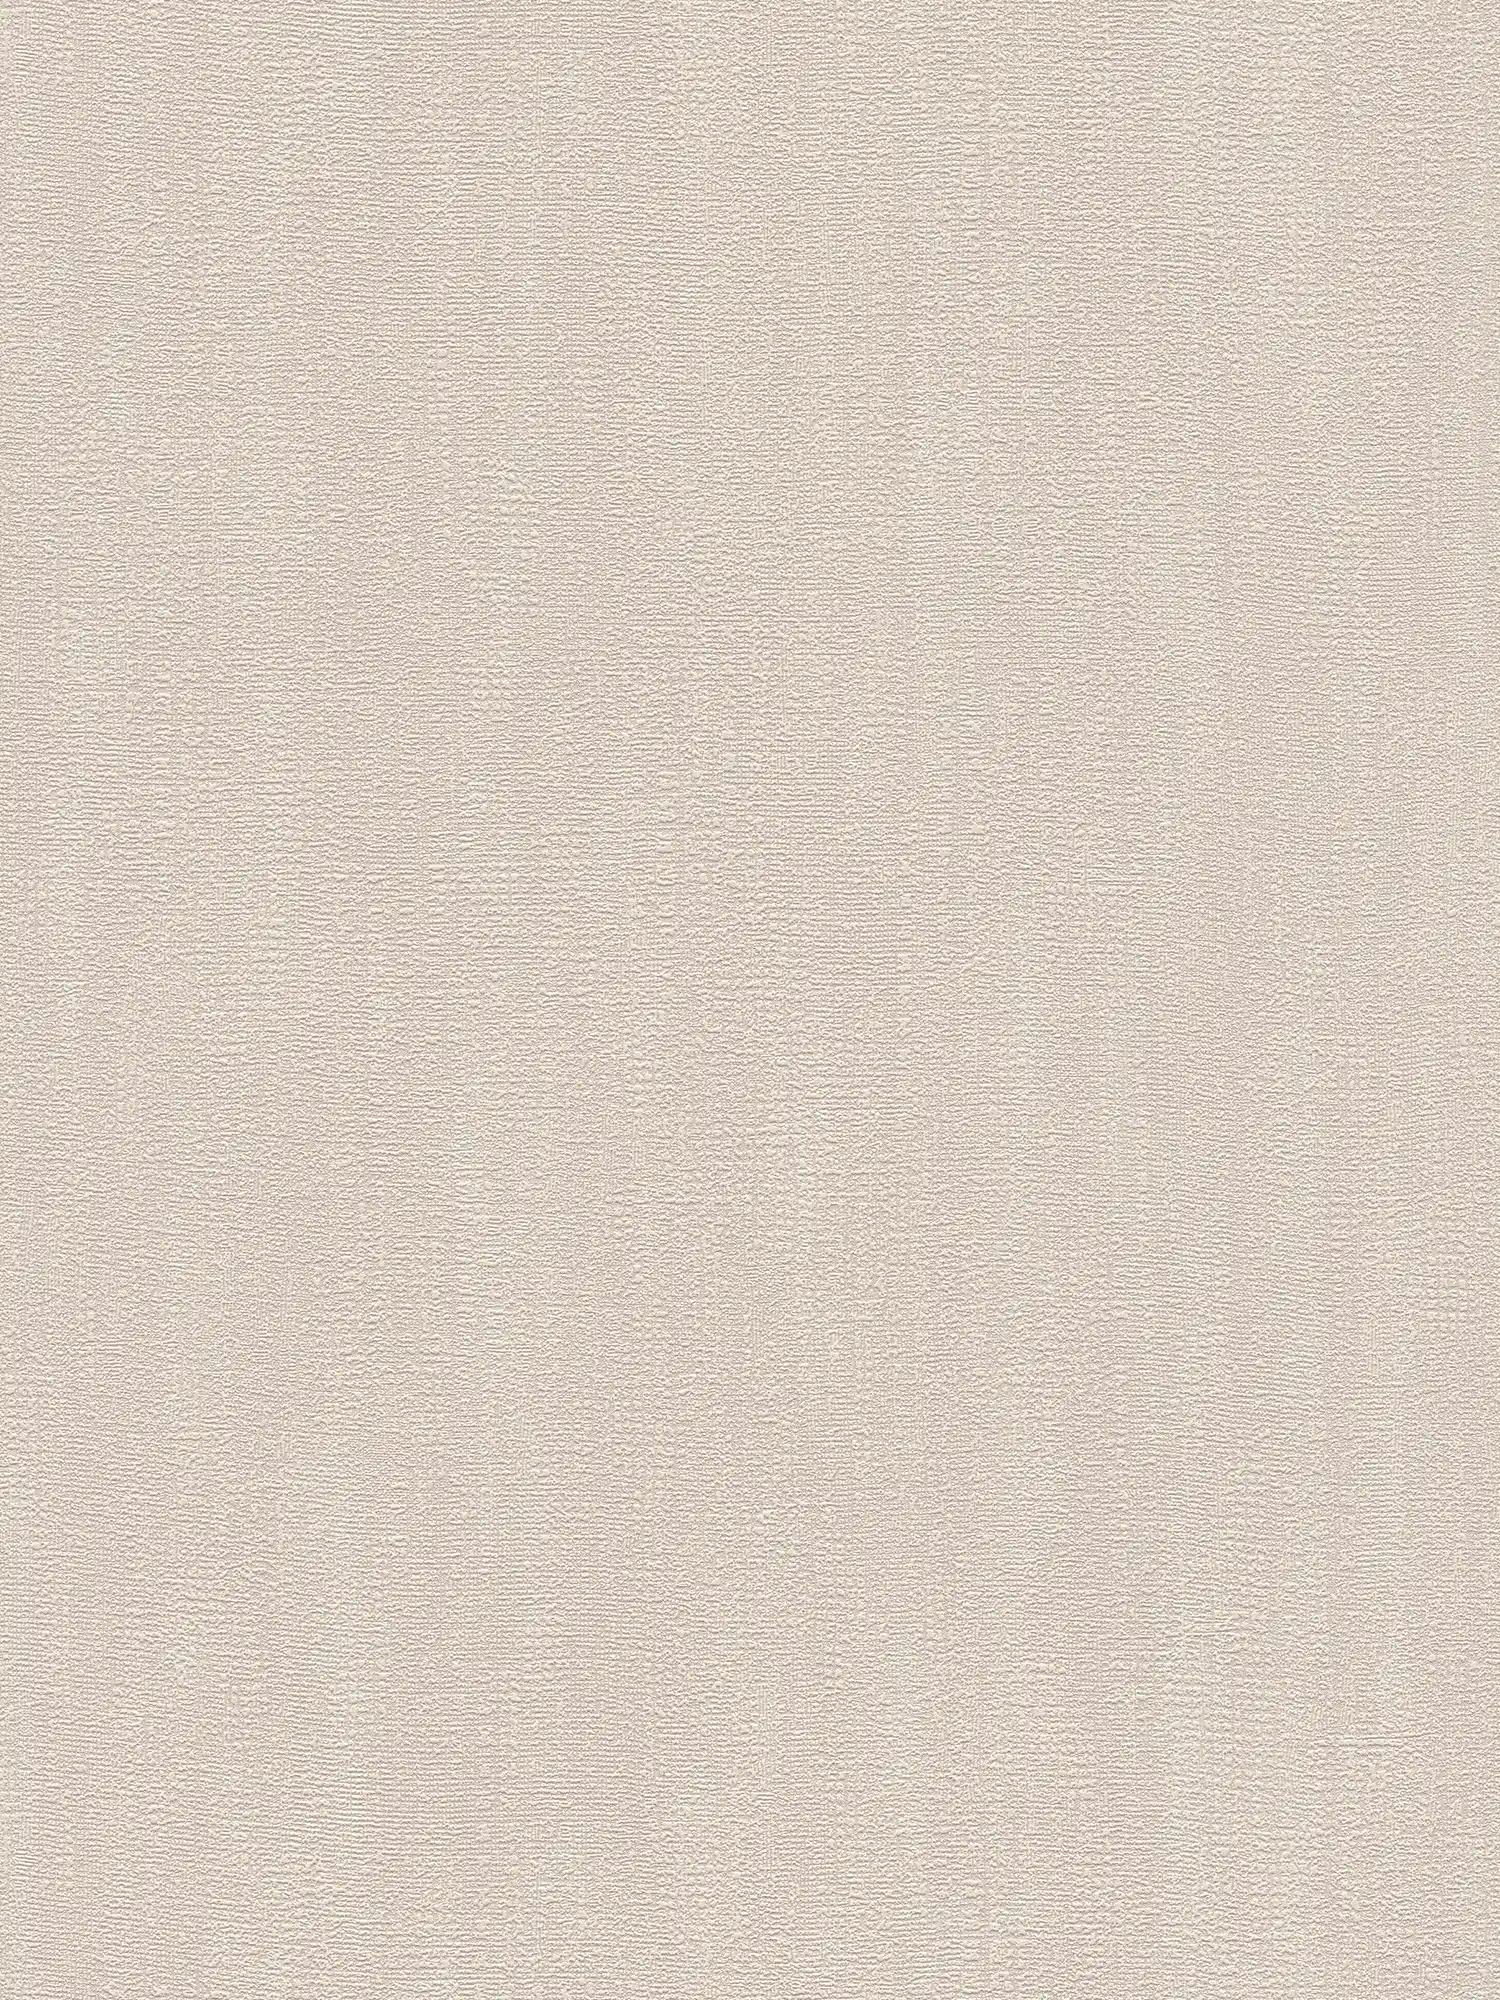 Textured wallpaper with texture pattern - beige, brown
